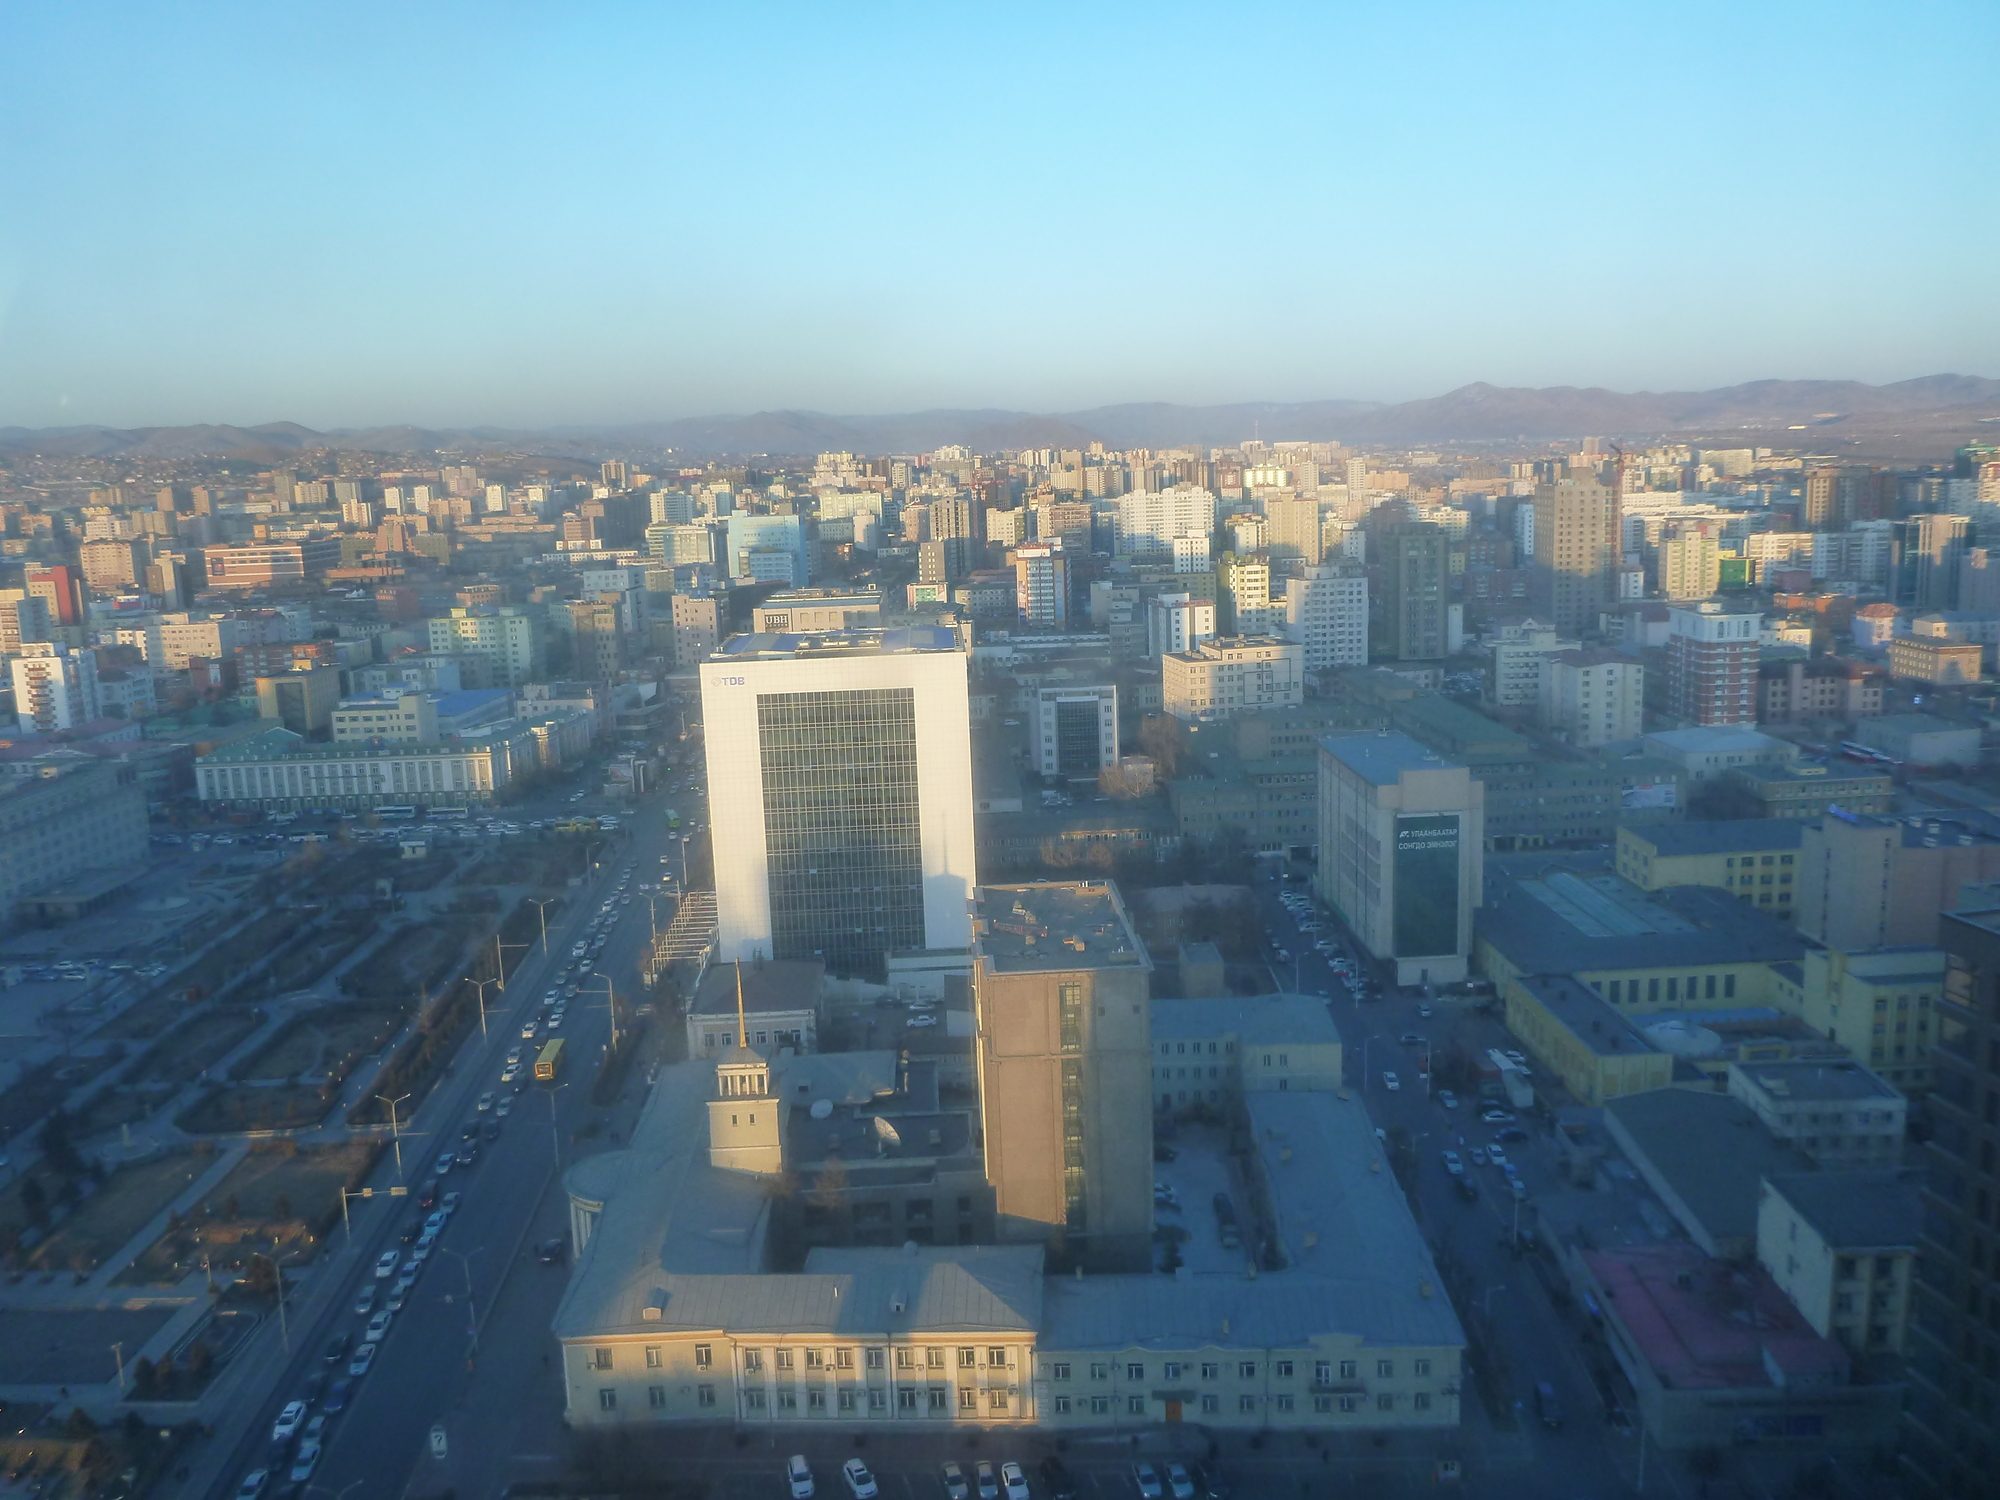 Baatpacking in Mongolia: Exploring the Red Hero, Ulaan Baatar, Mongolia